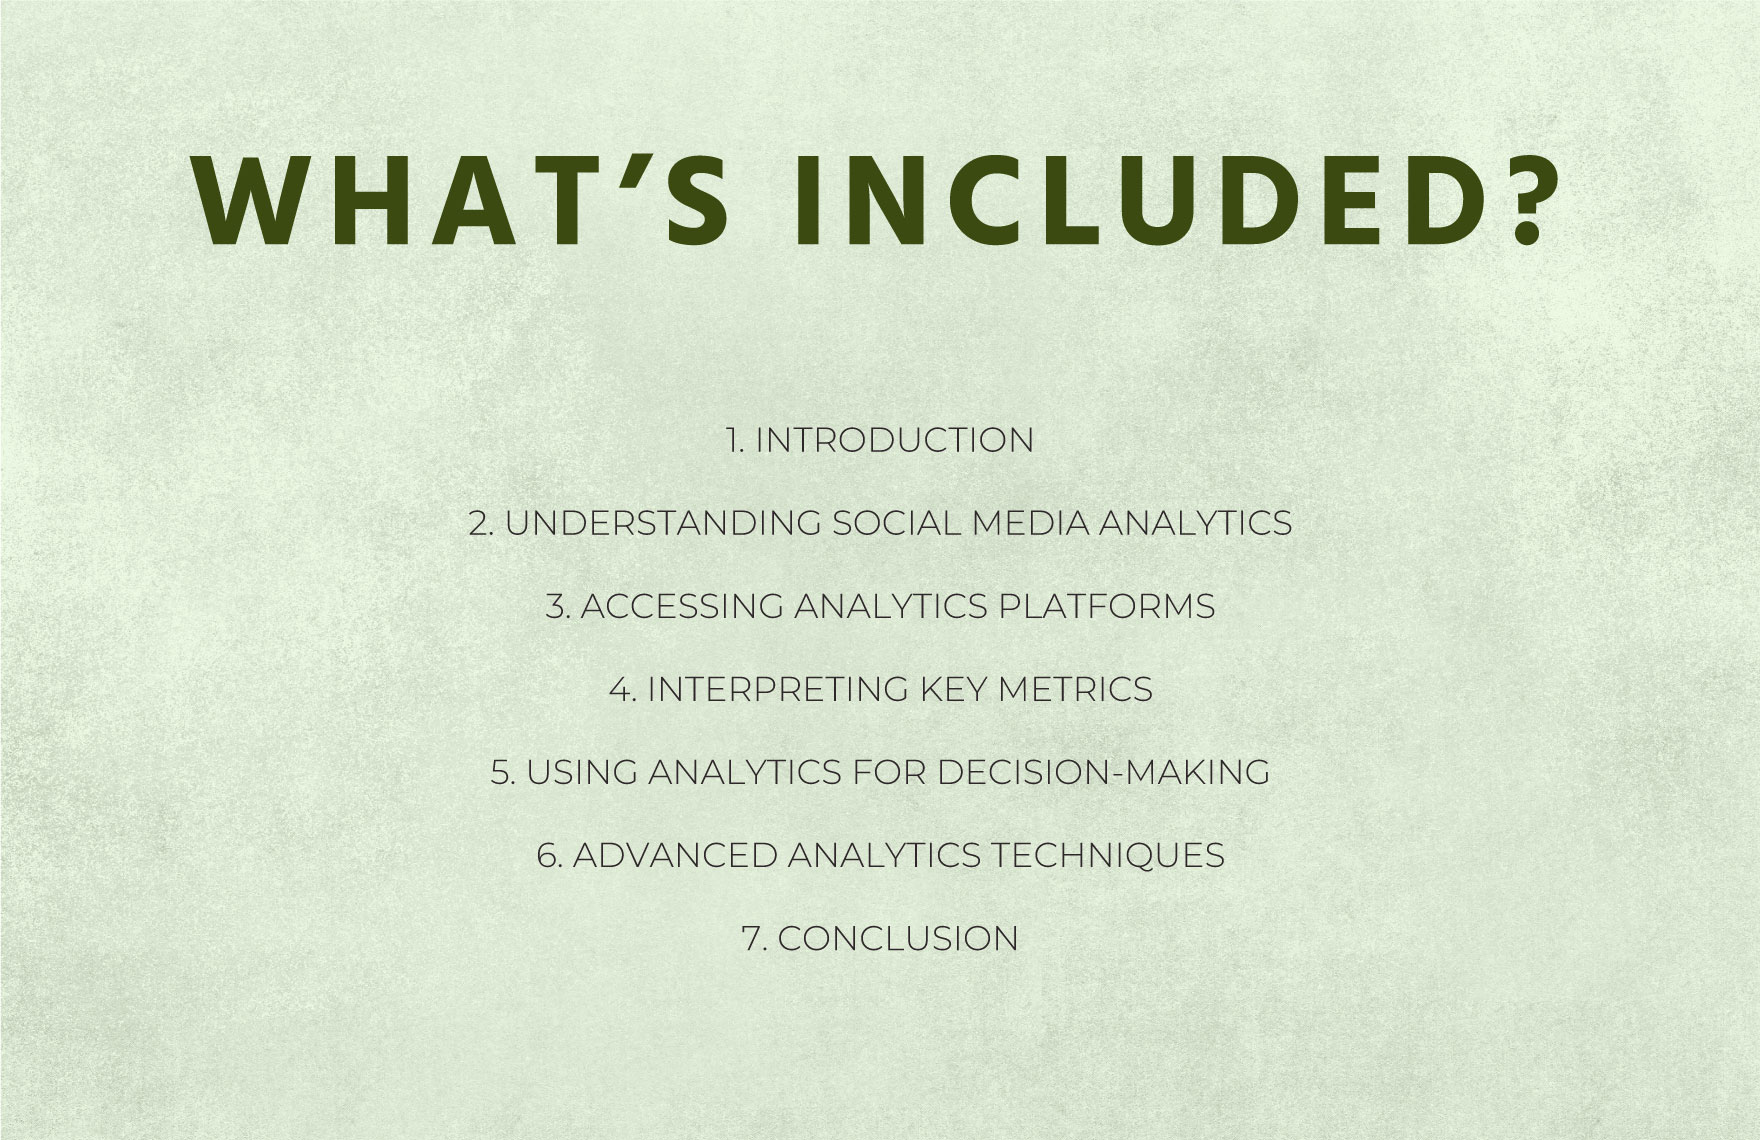 Social Media Marketing Analytics User Guide Template